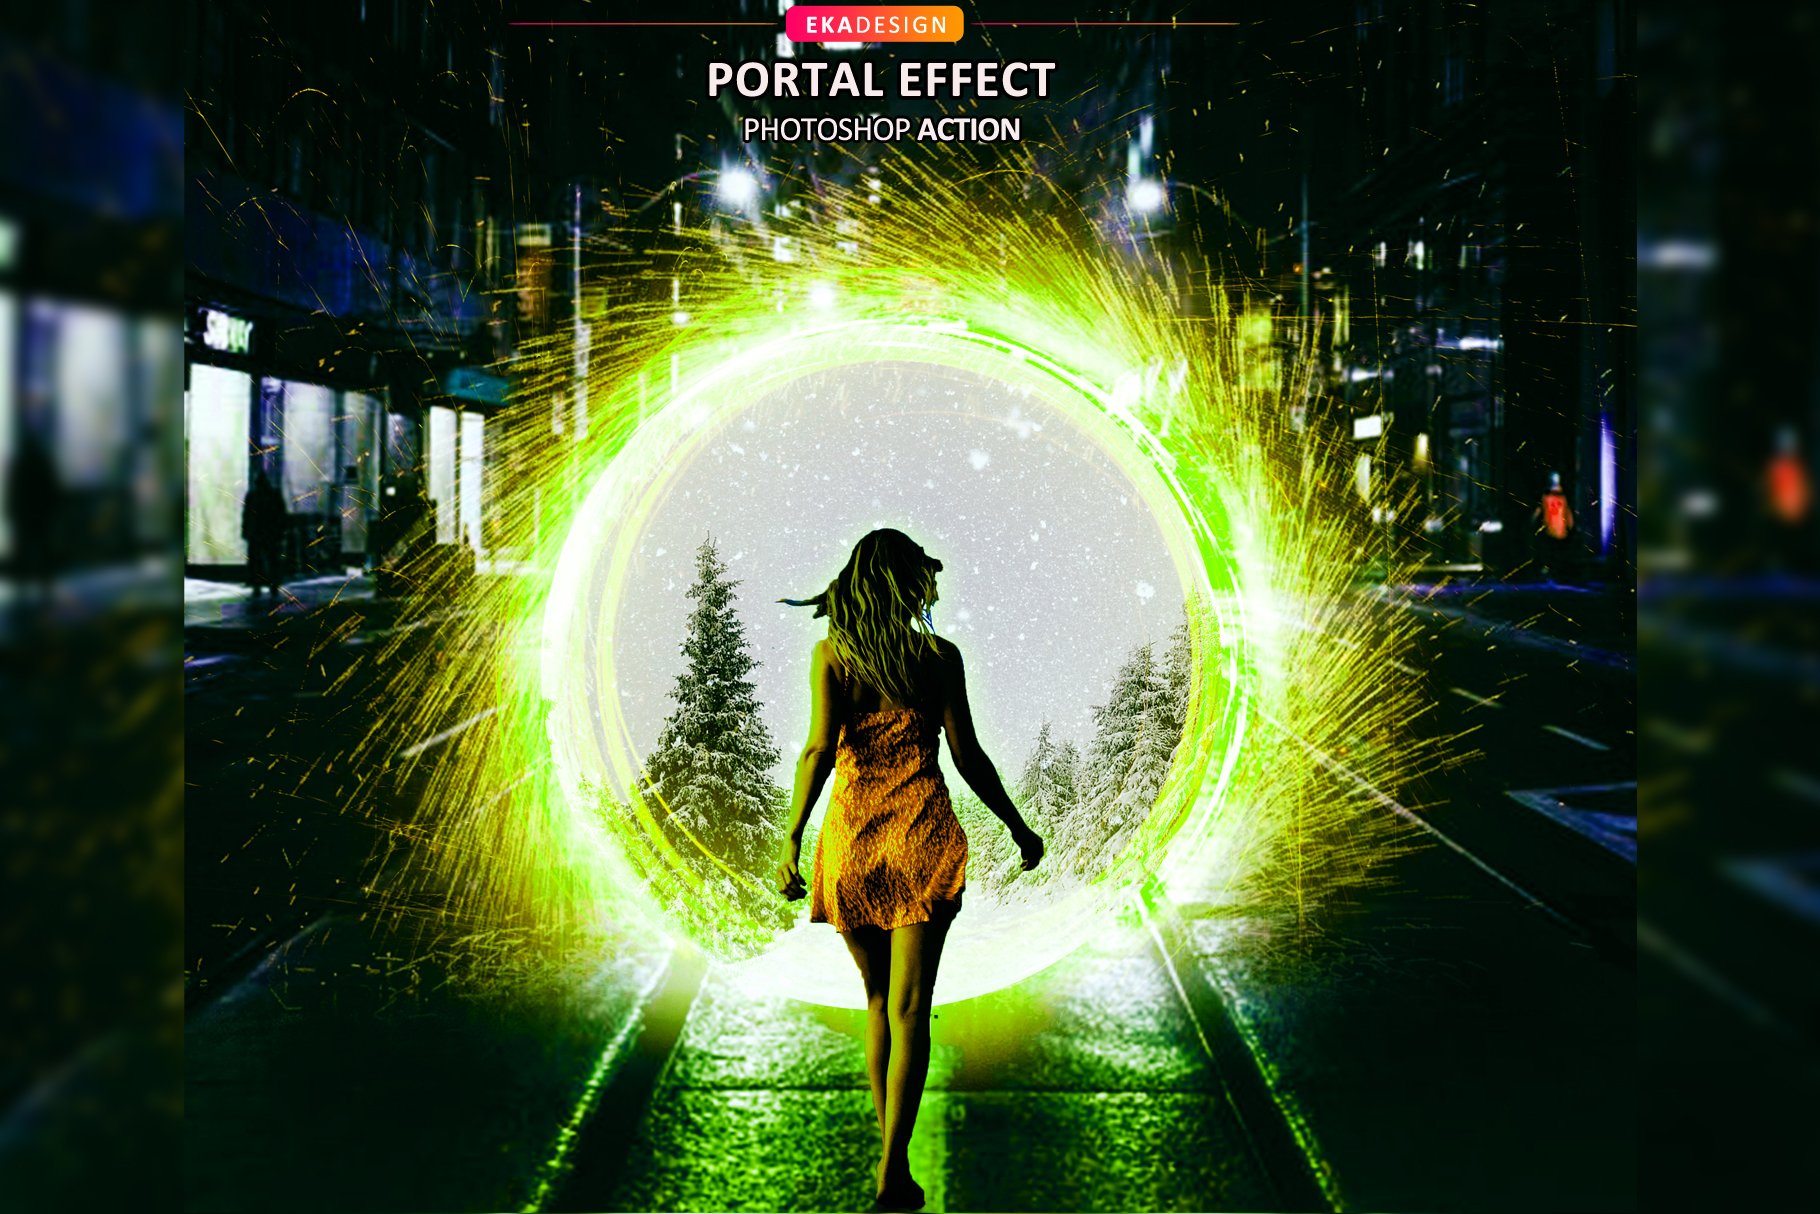 Portal Effect Photoshop Actioncover image.